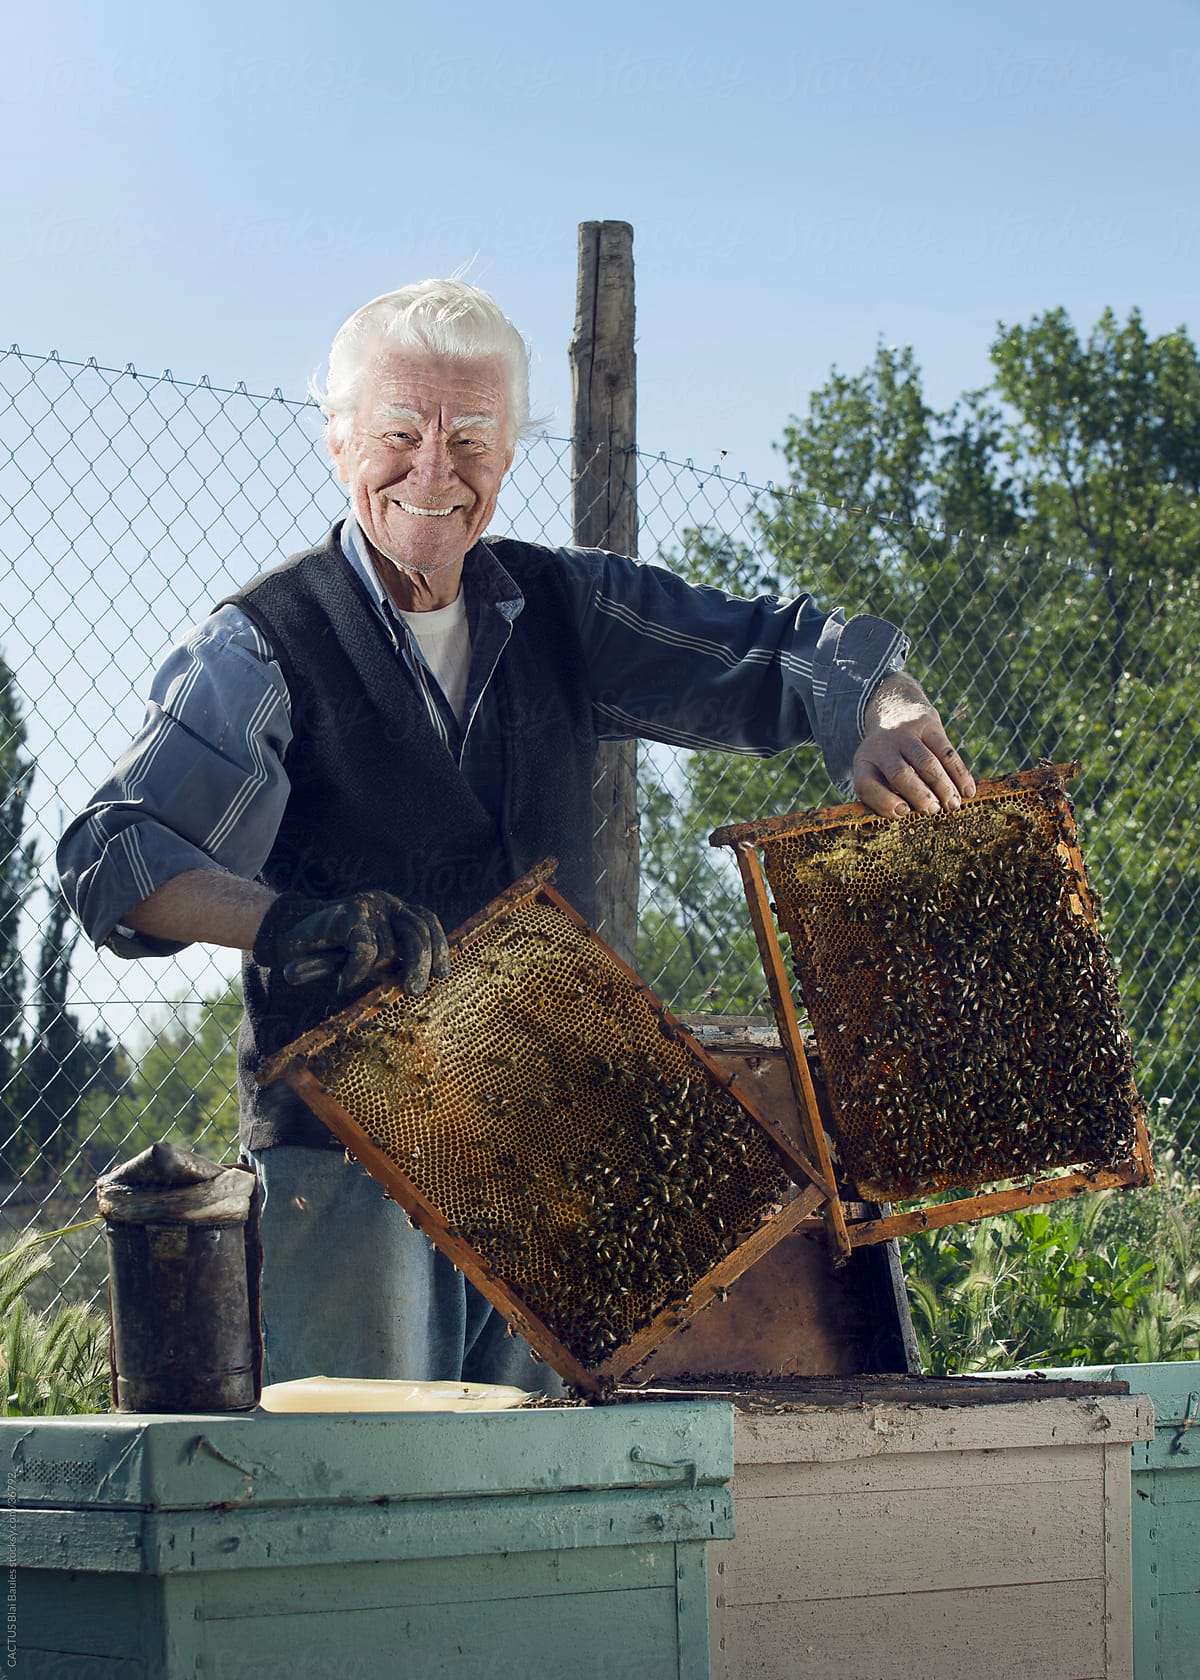 Senior beekeeper showing his bees.